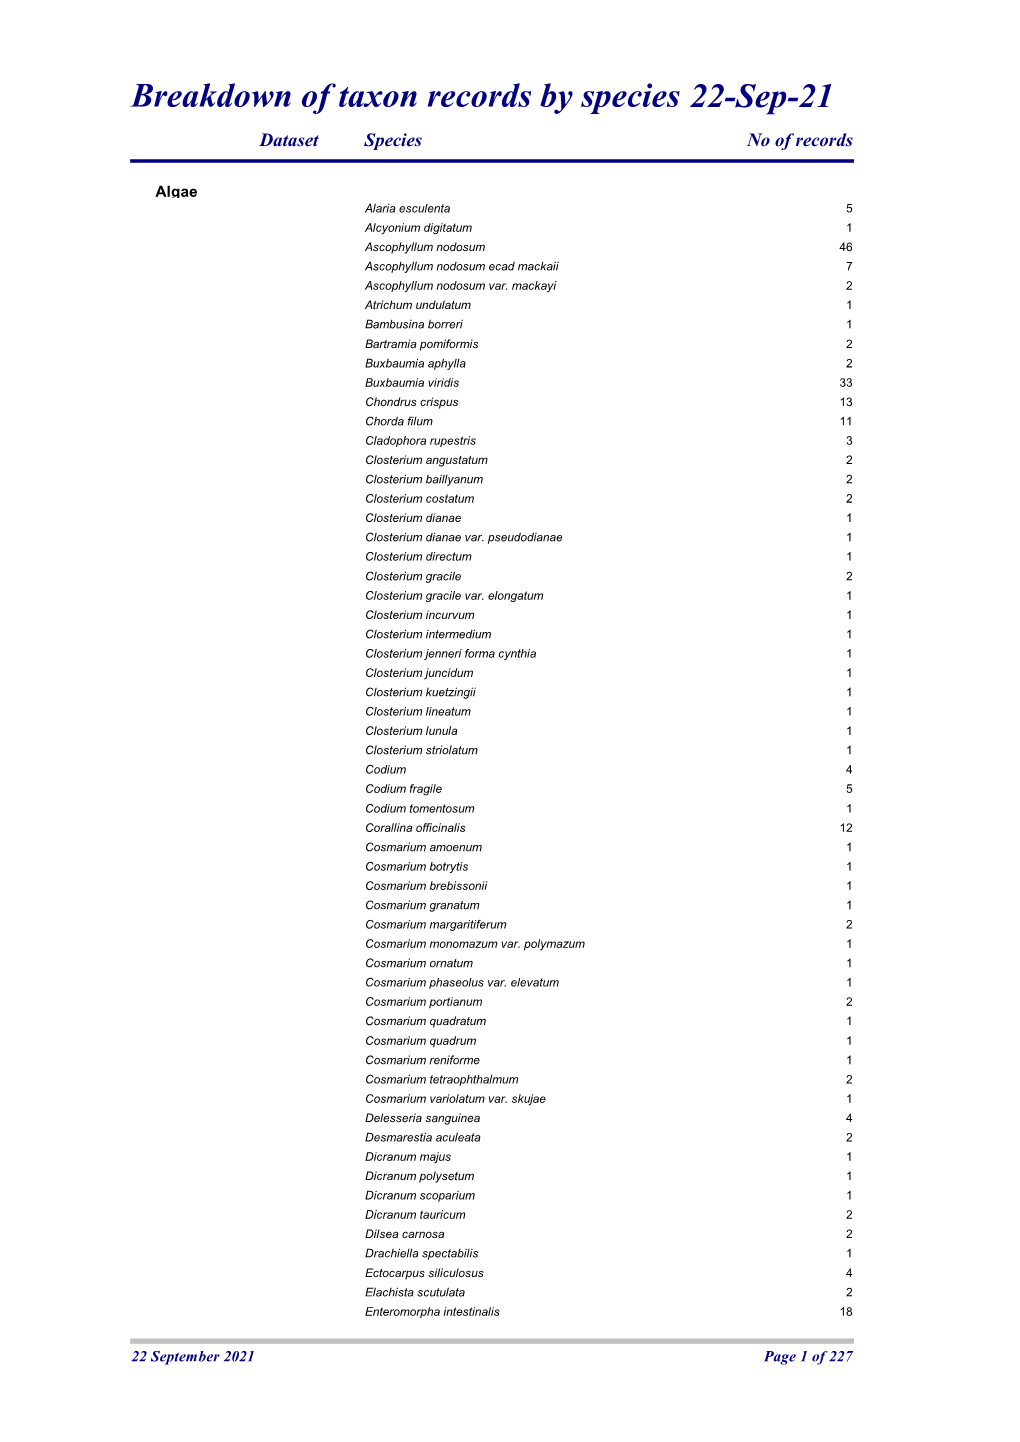 Breakdown of Taxon Records by Species 26-Mar-21